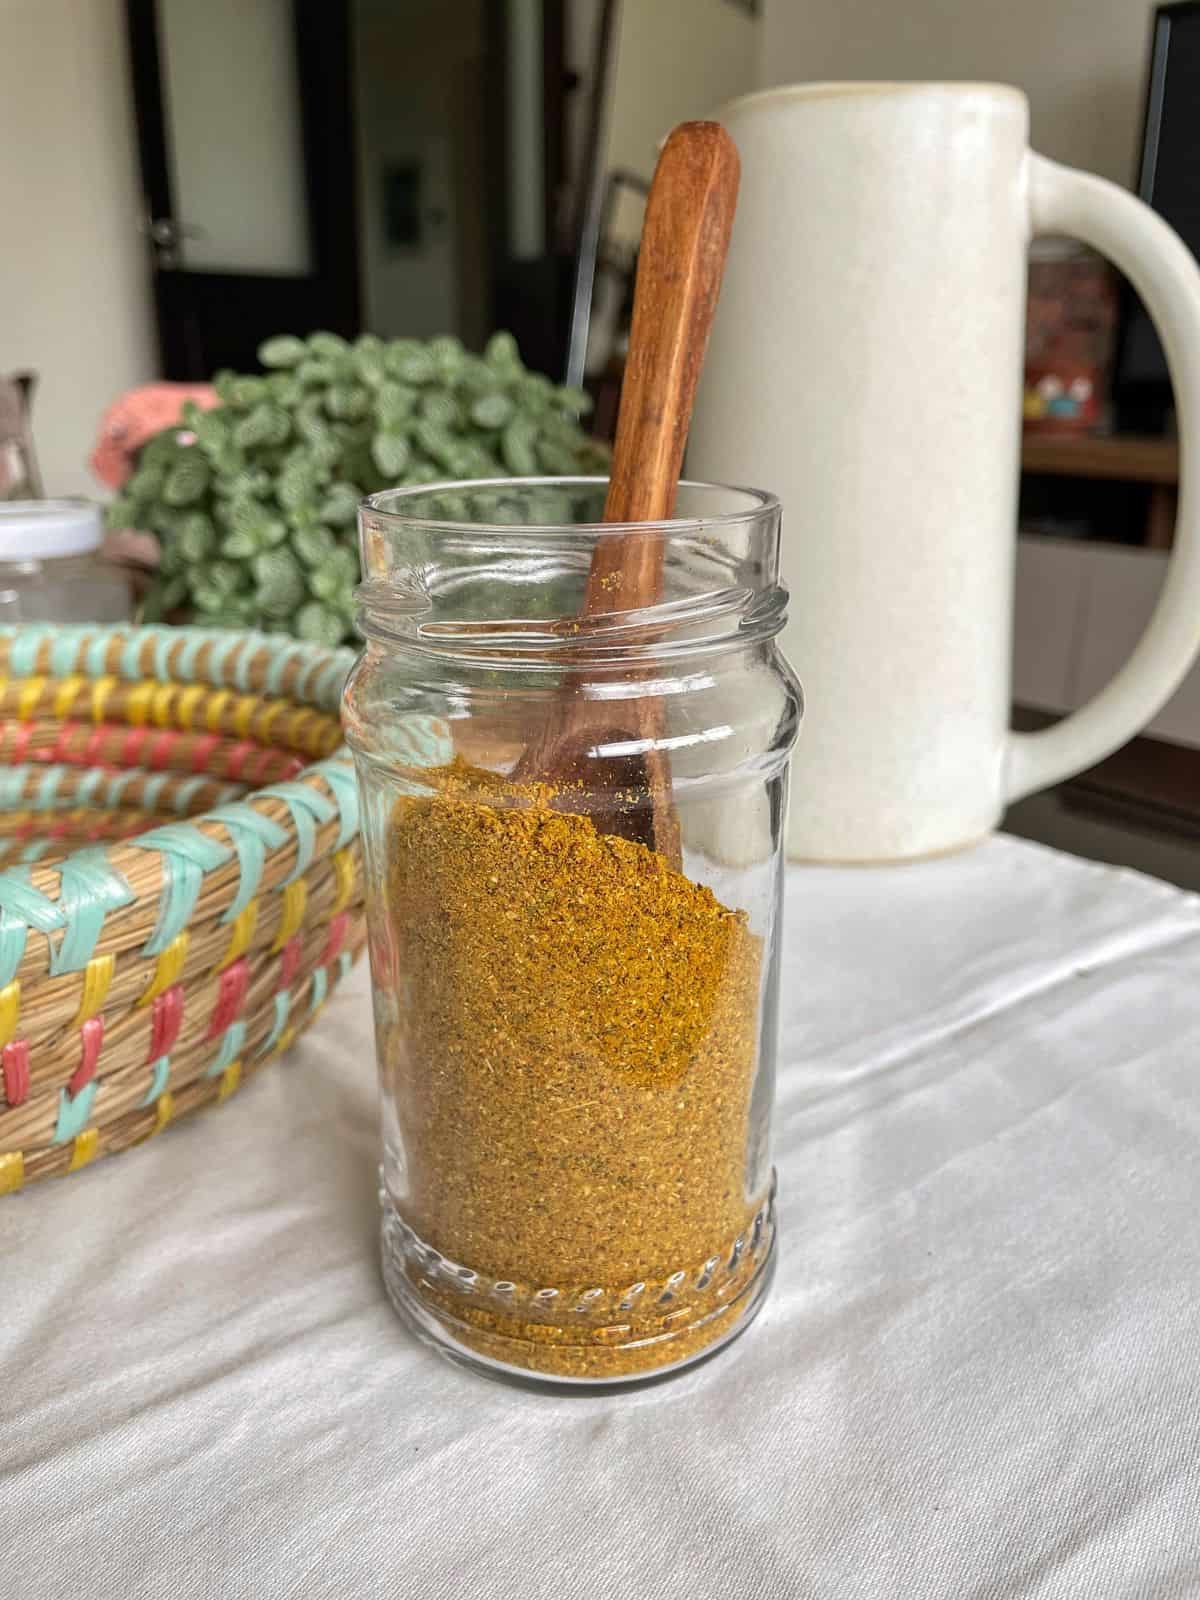 Bezar spice in a glass jar.